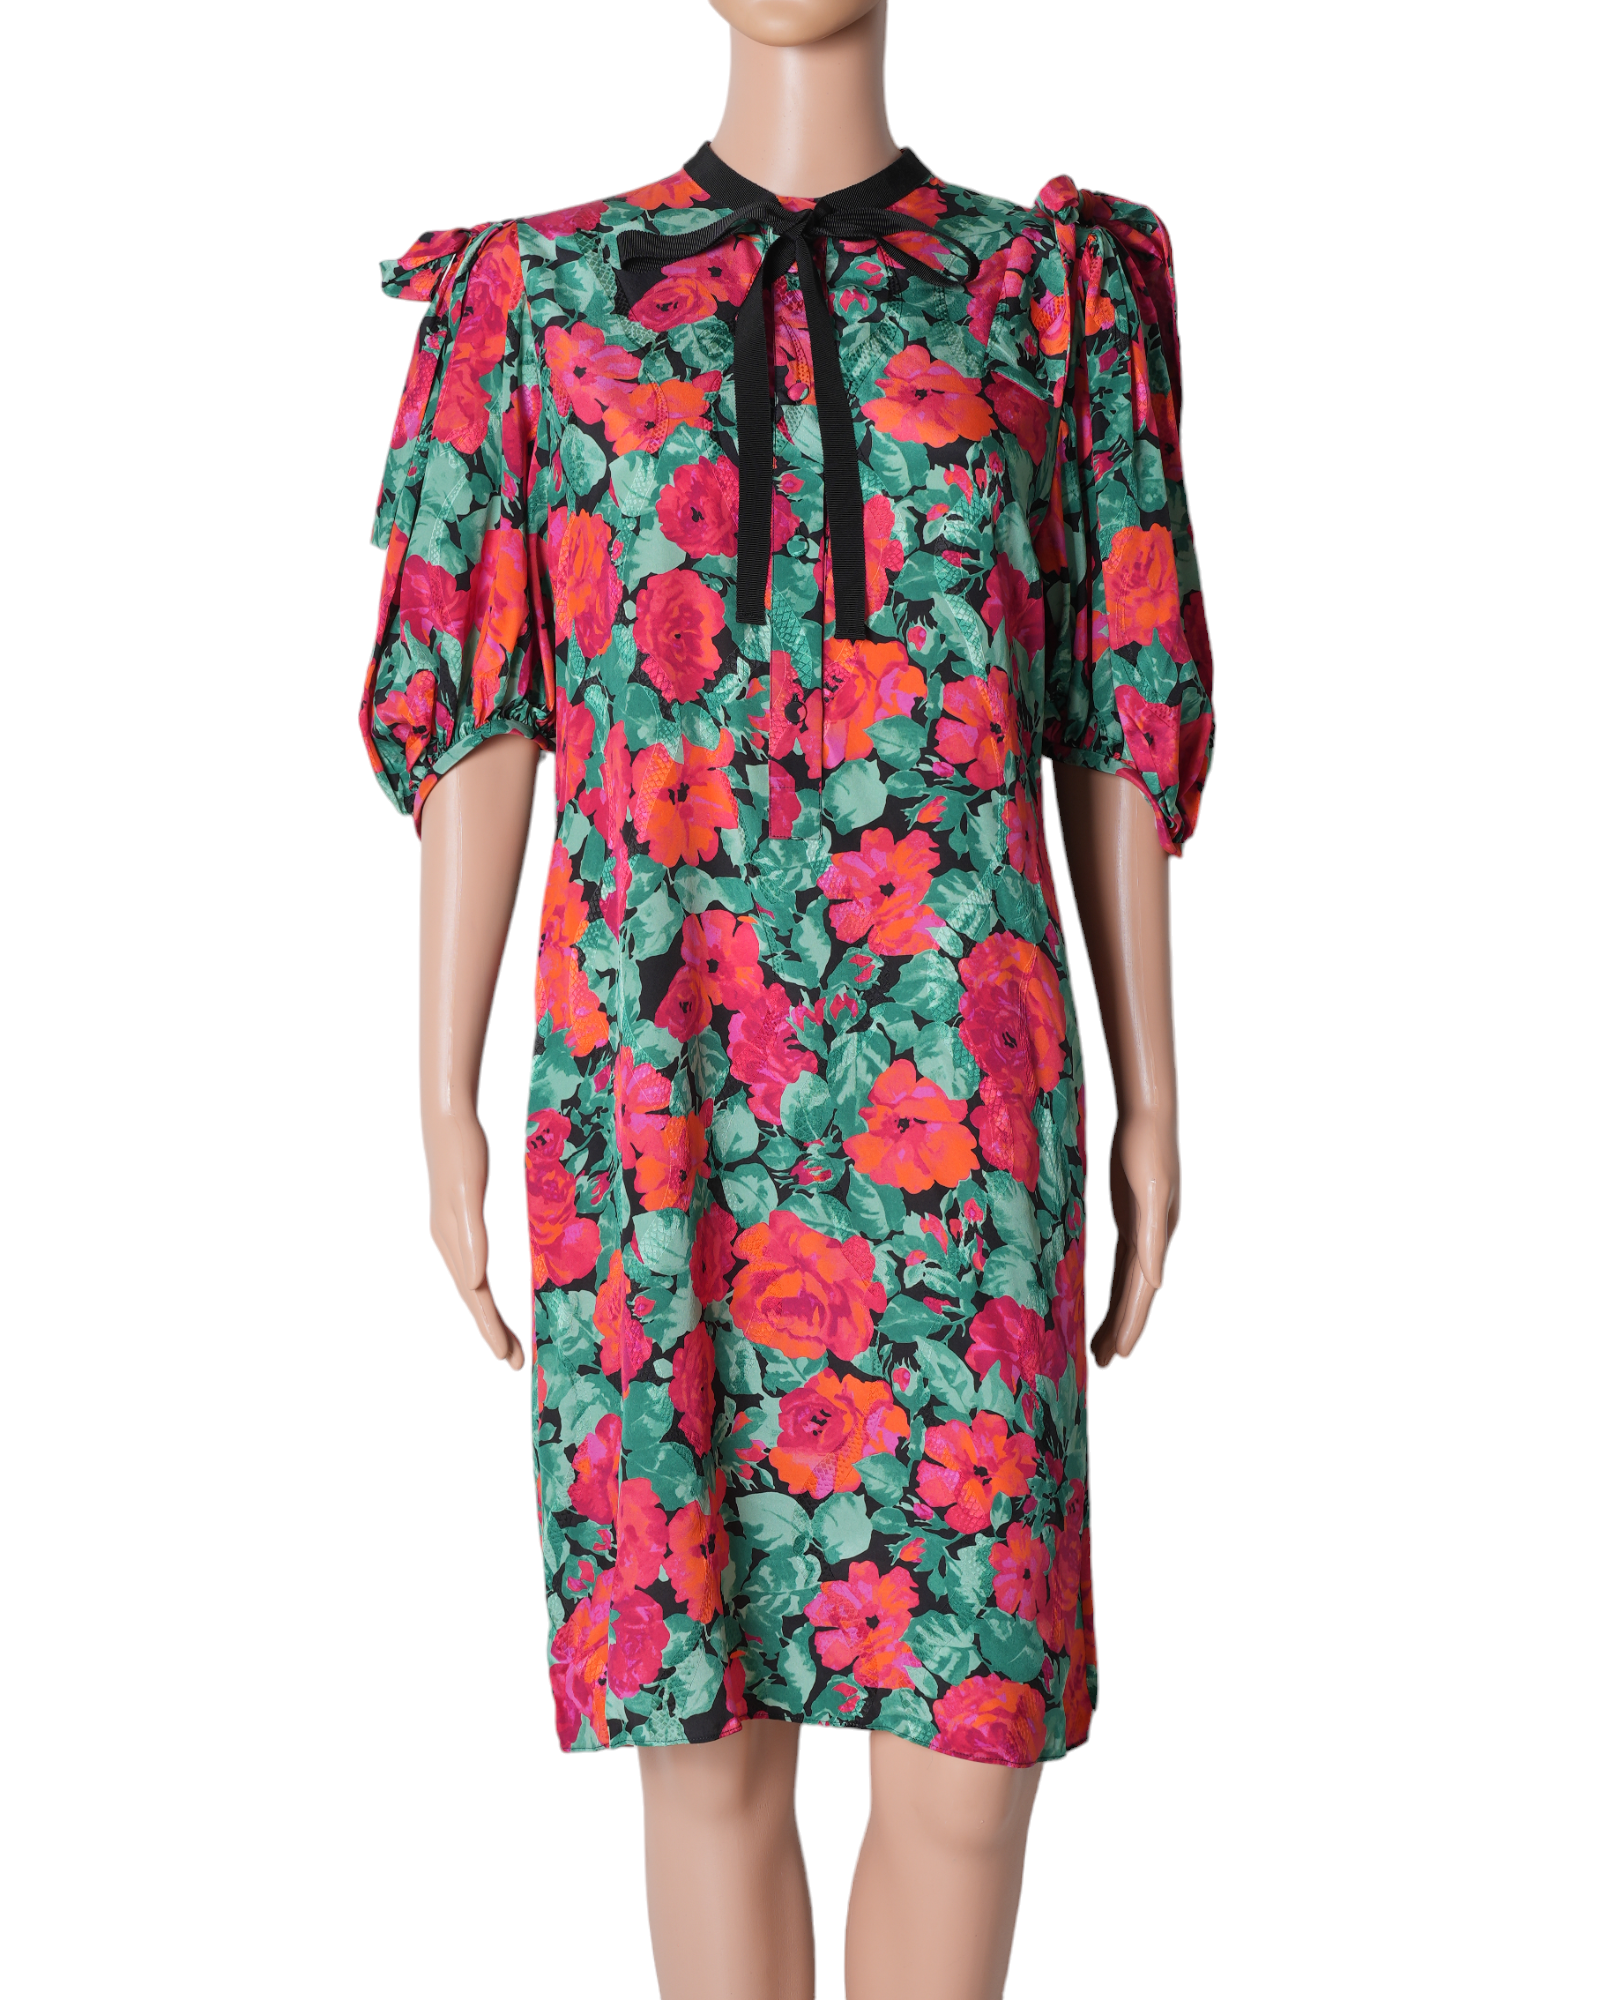 Gucci Poppy Floral Print Dress